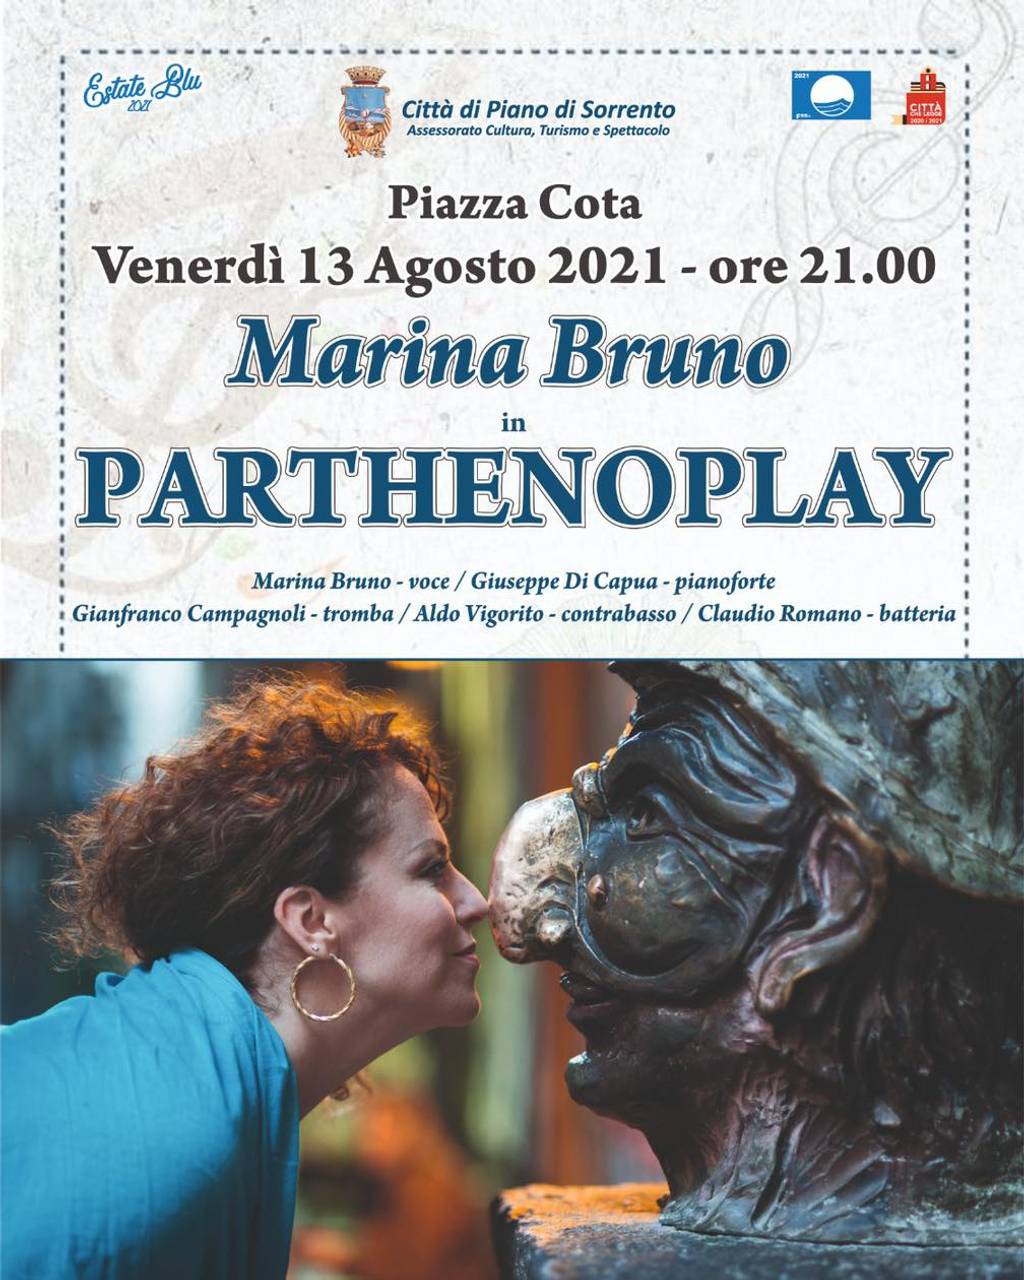 Marina Bruno in Parthenoplat